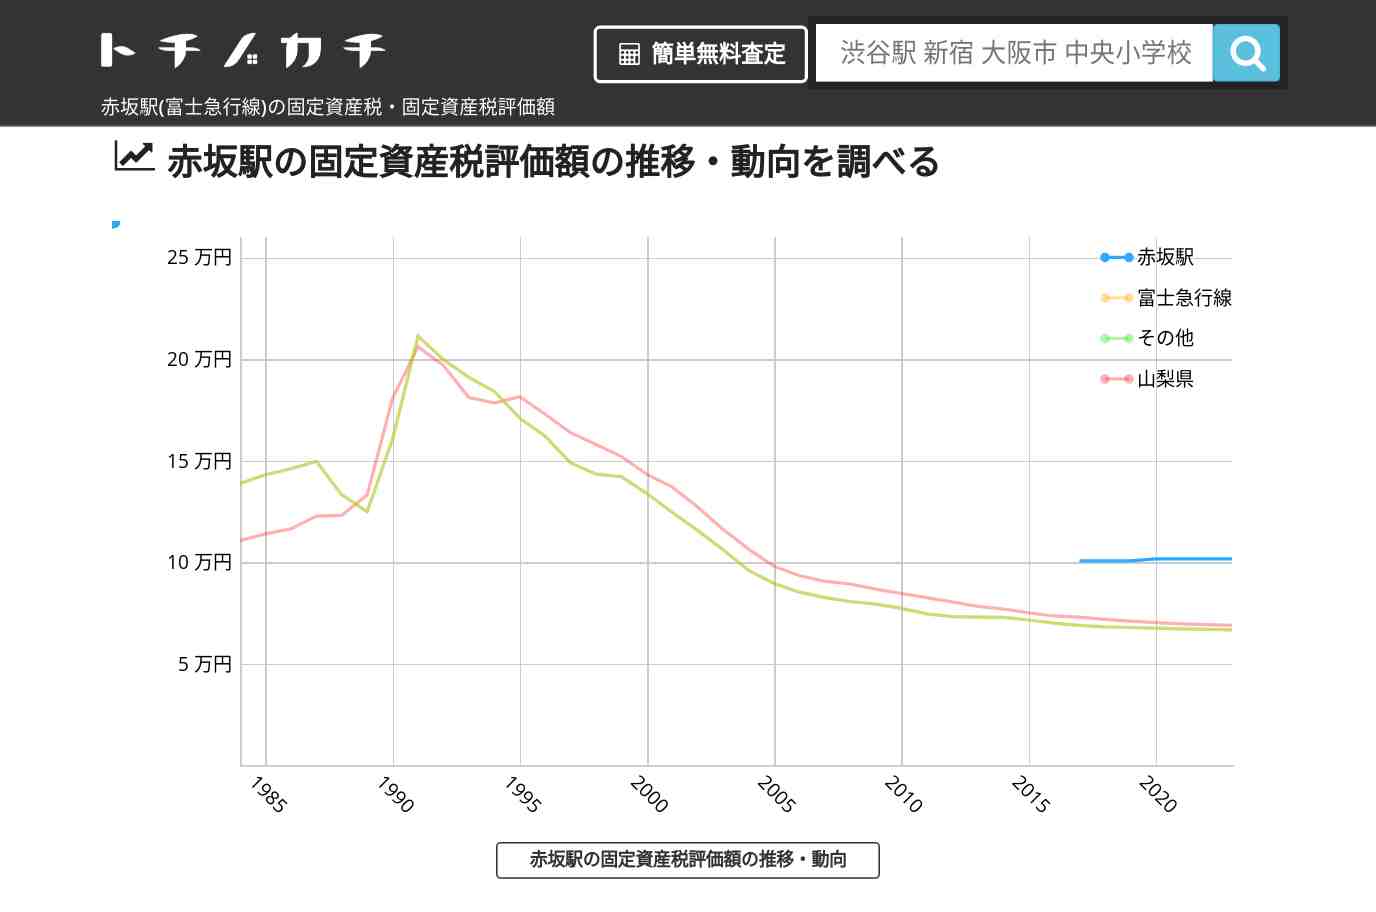 赤坂駅(富士急行線)の固定資産税・固定資産税評価額 | トチノカチ